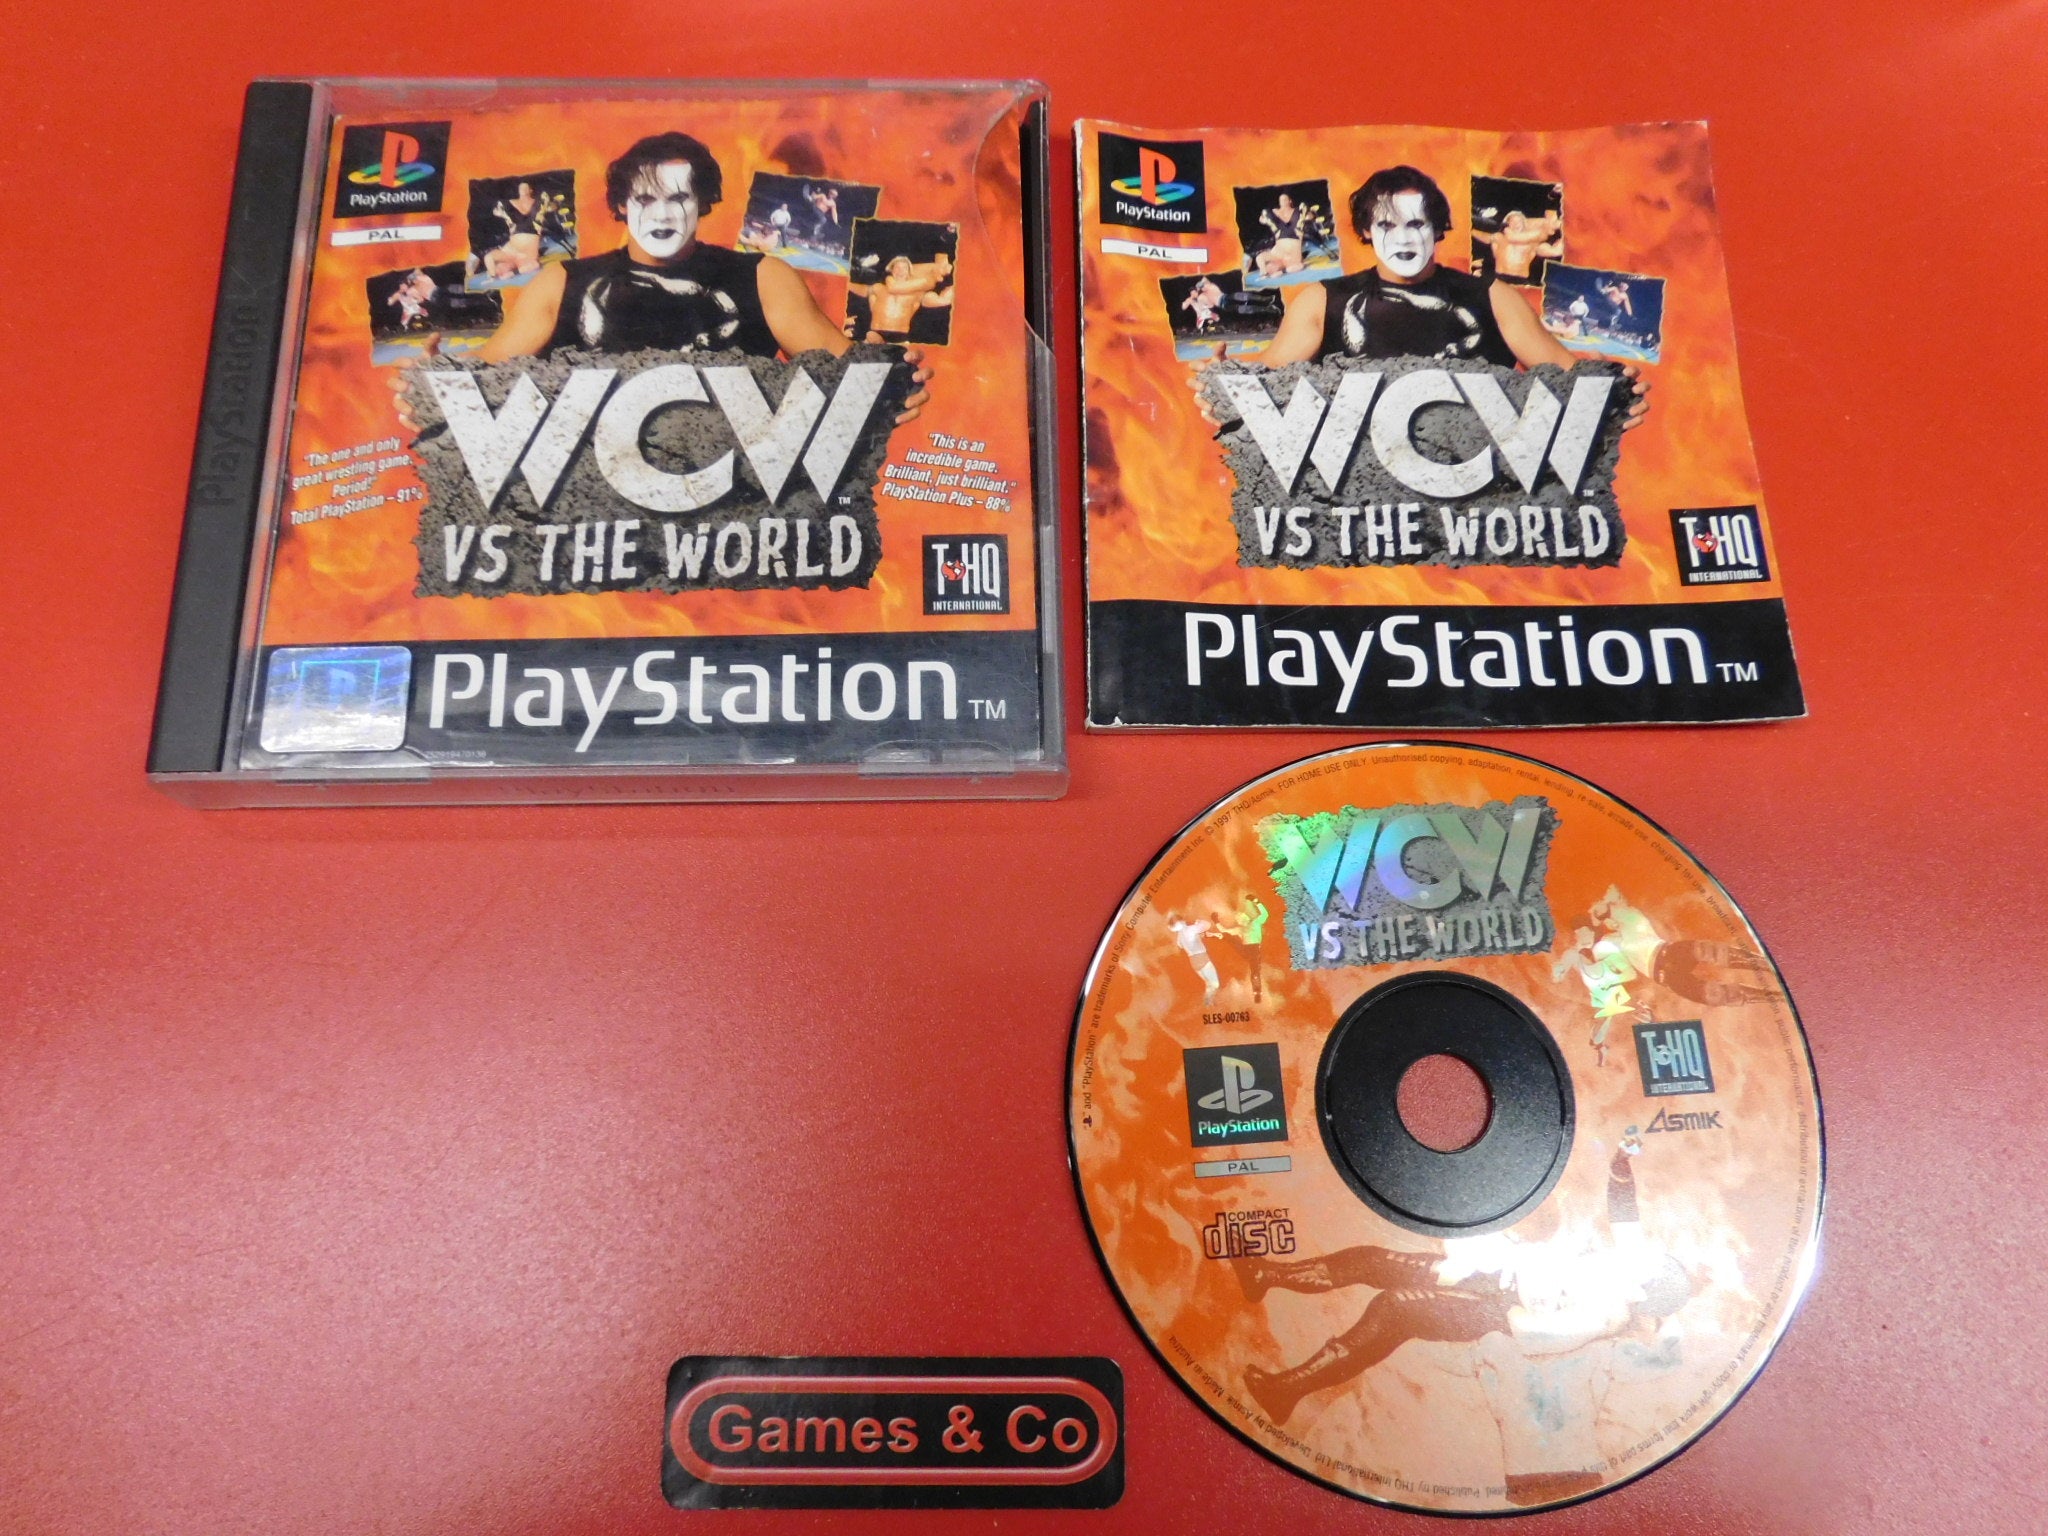 WCW VS THE WORLD